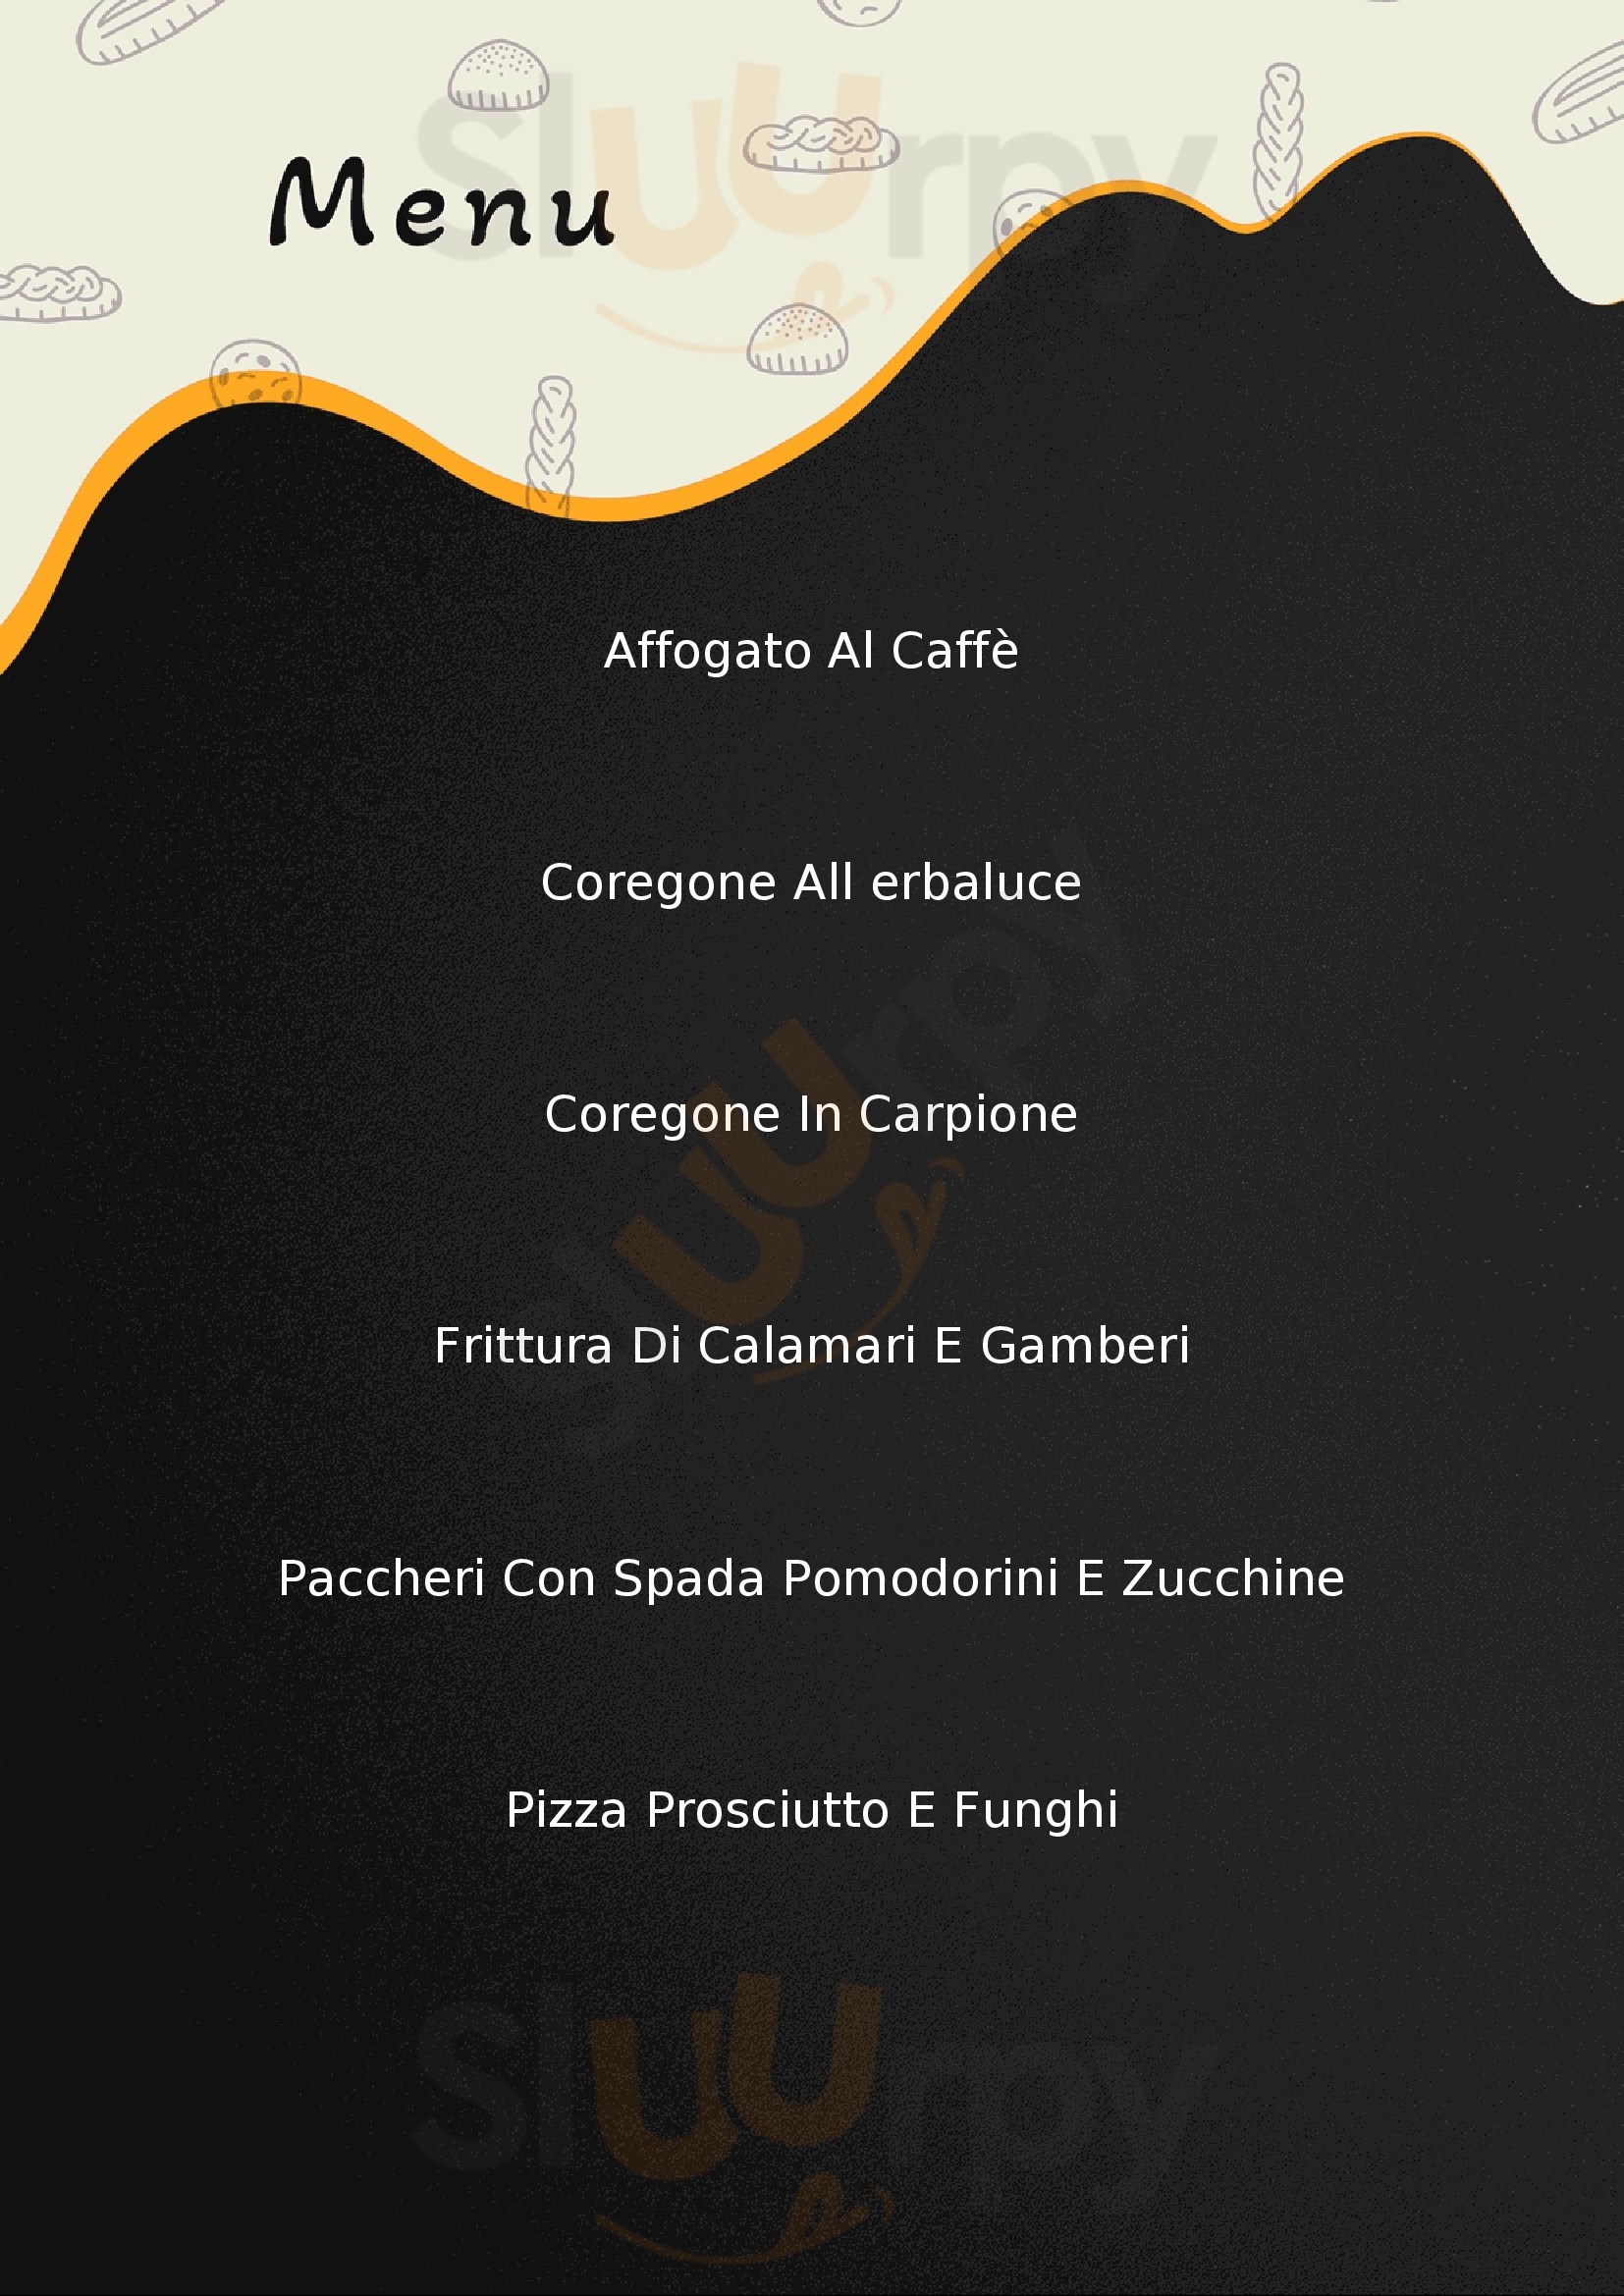 Seminara Restaurant Viverone menù 1 pagina